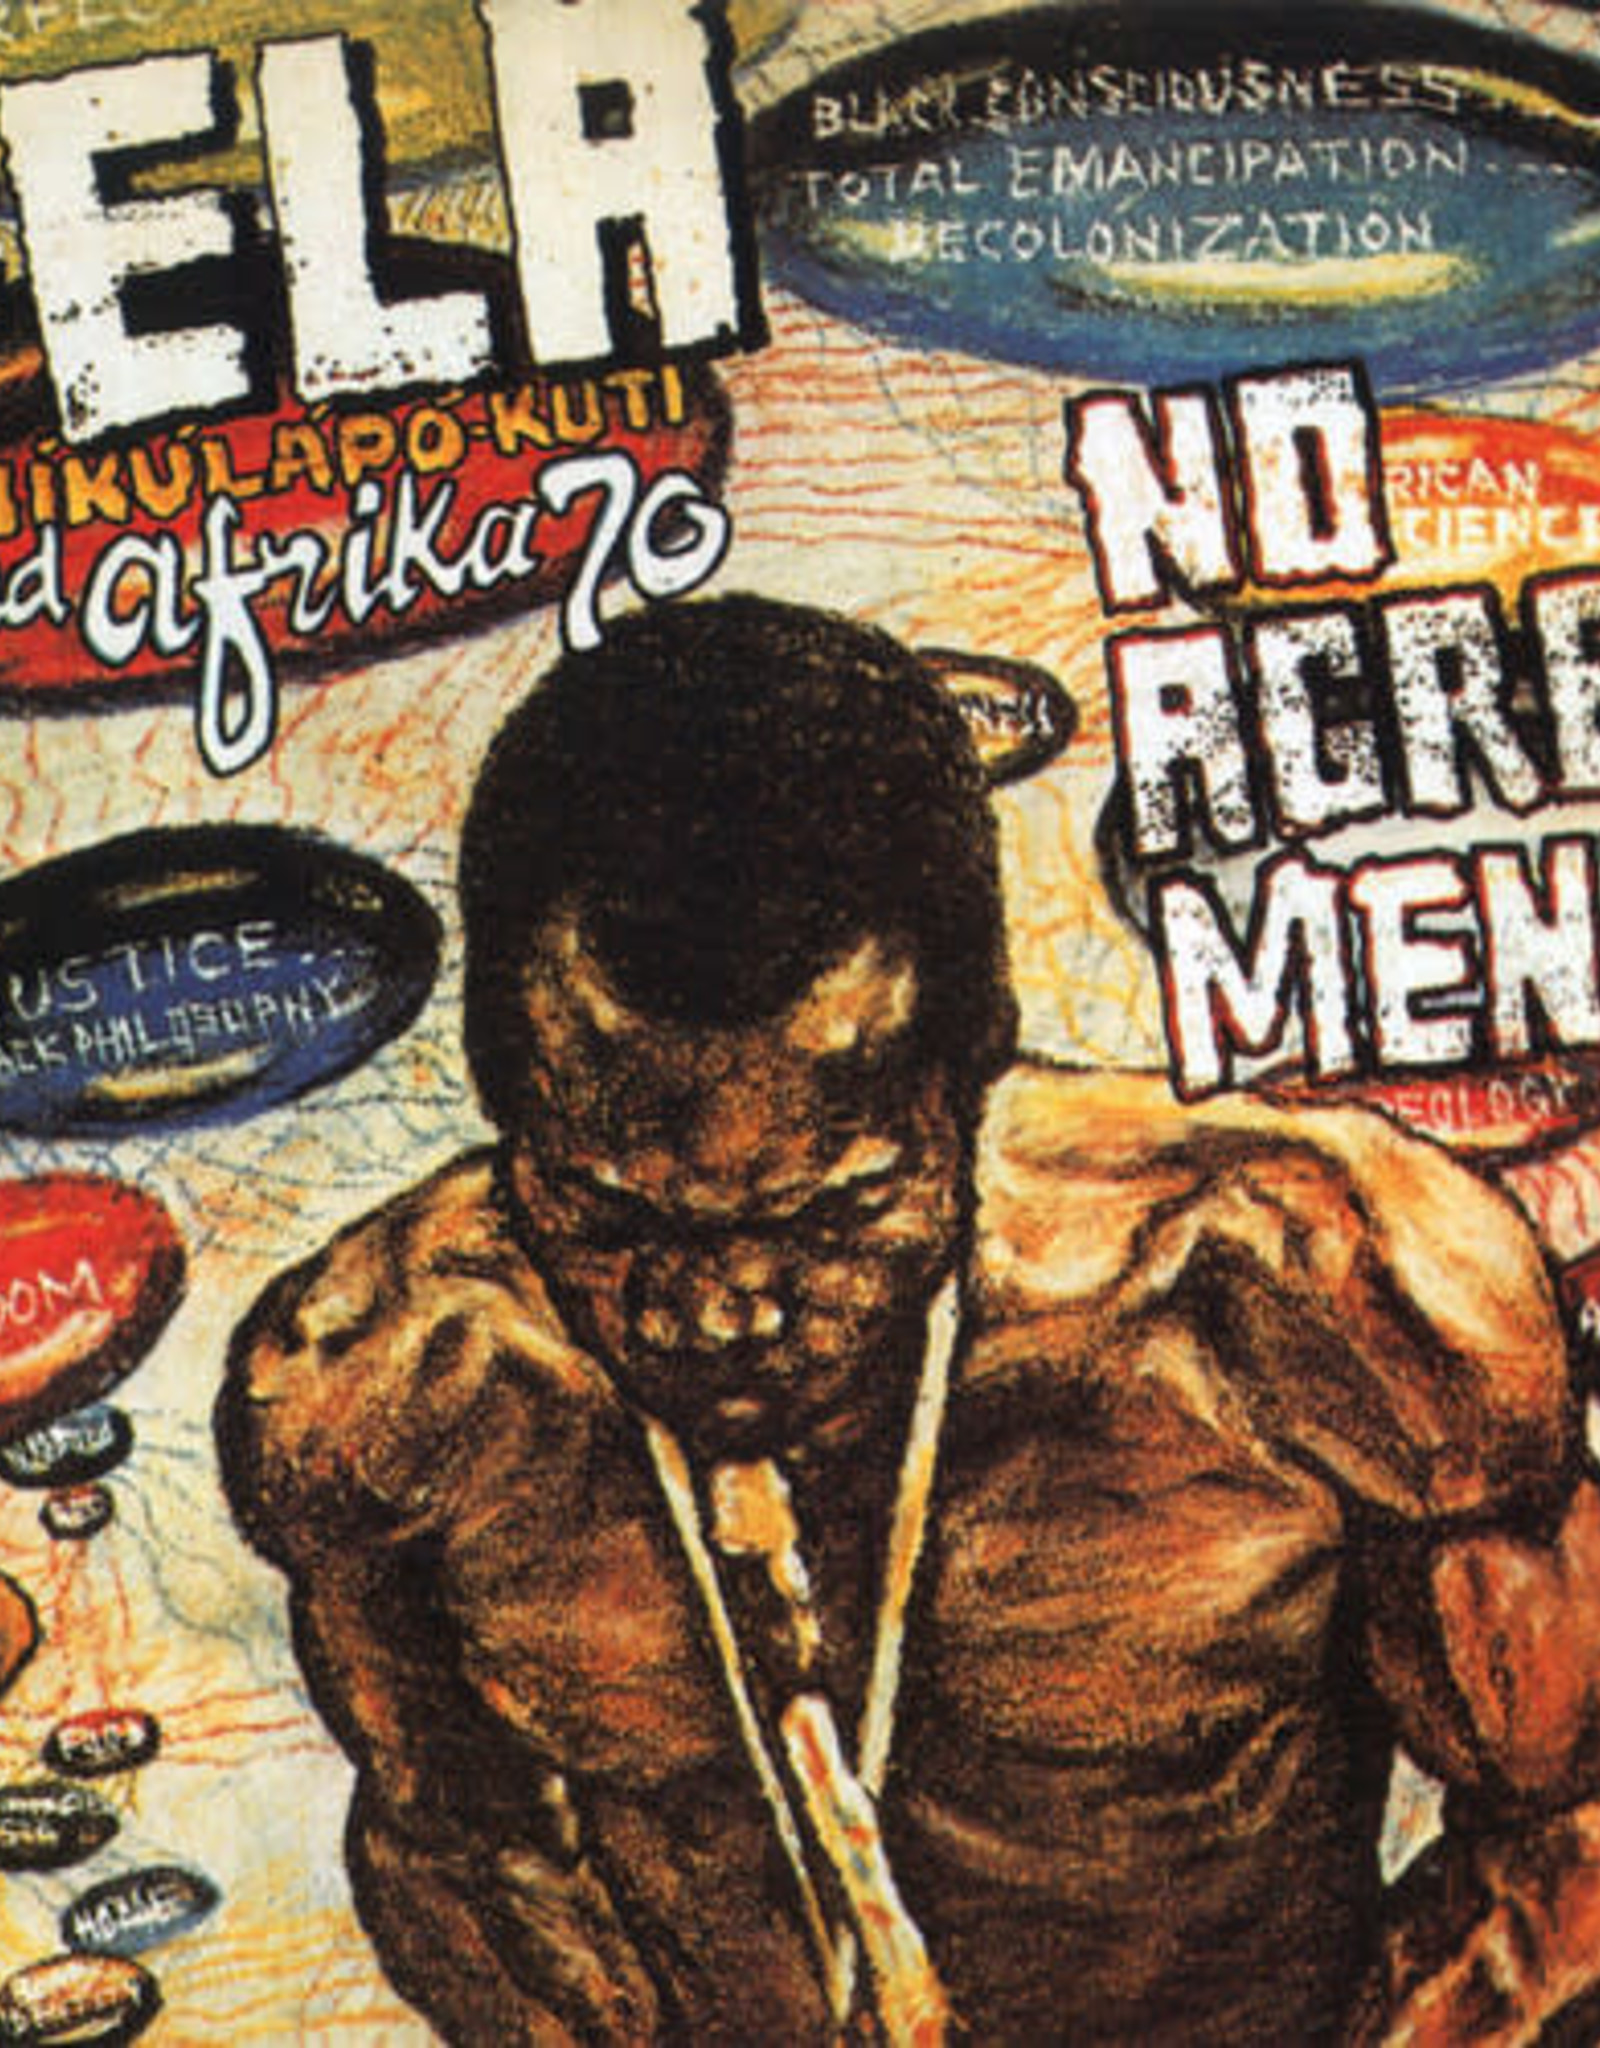 Fela Kuti - No Agreement